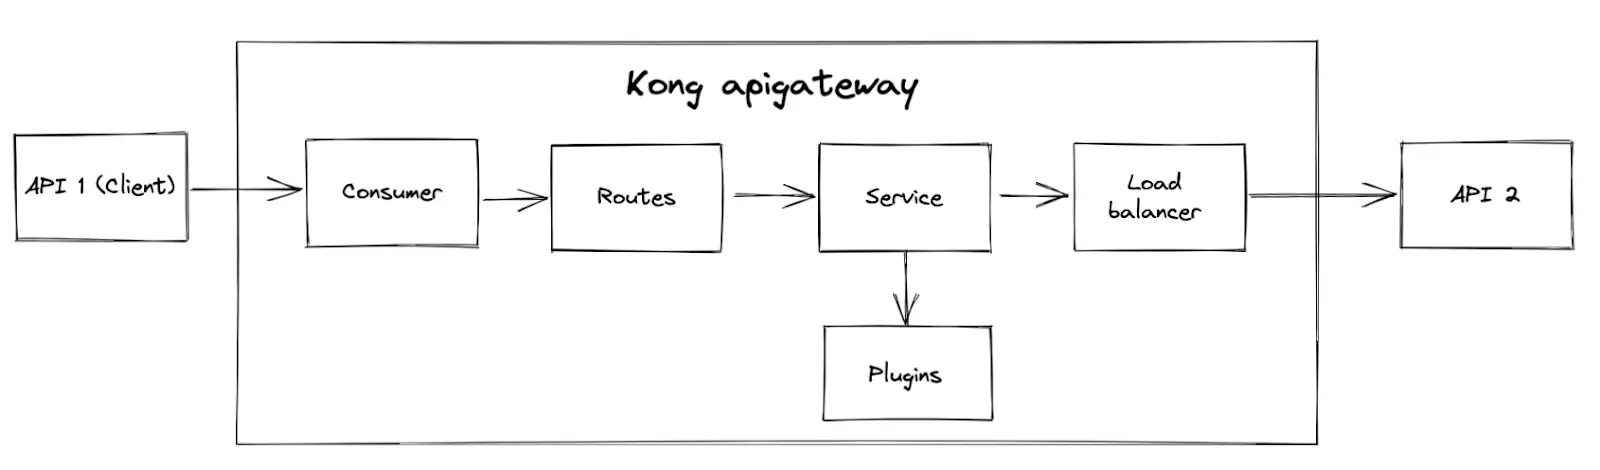 Kong_apigateway